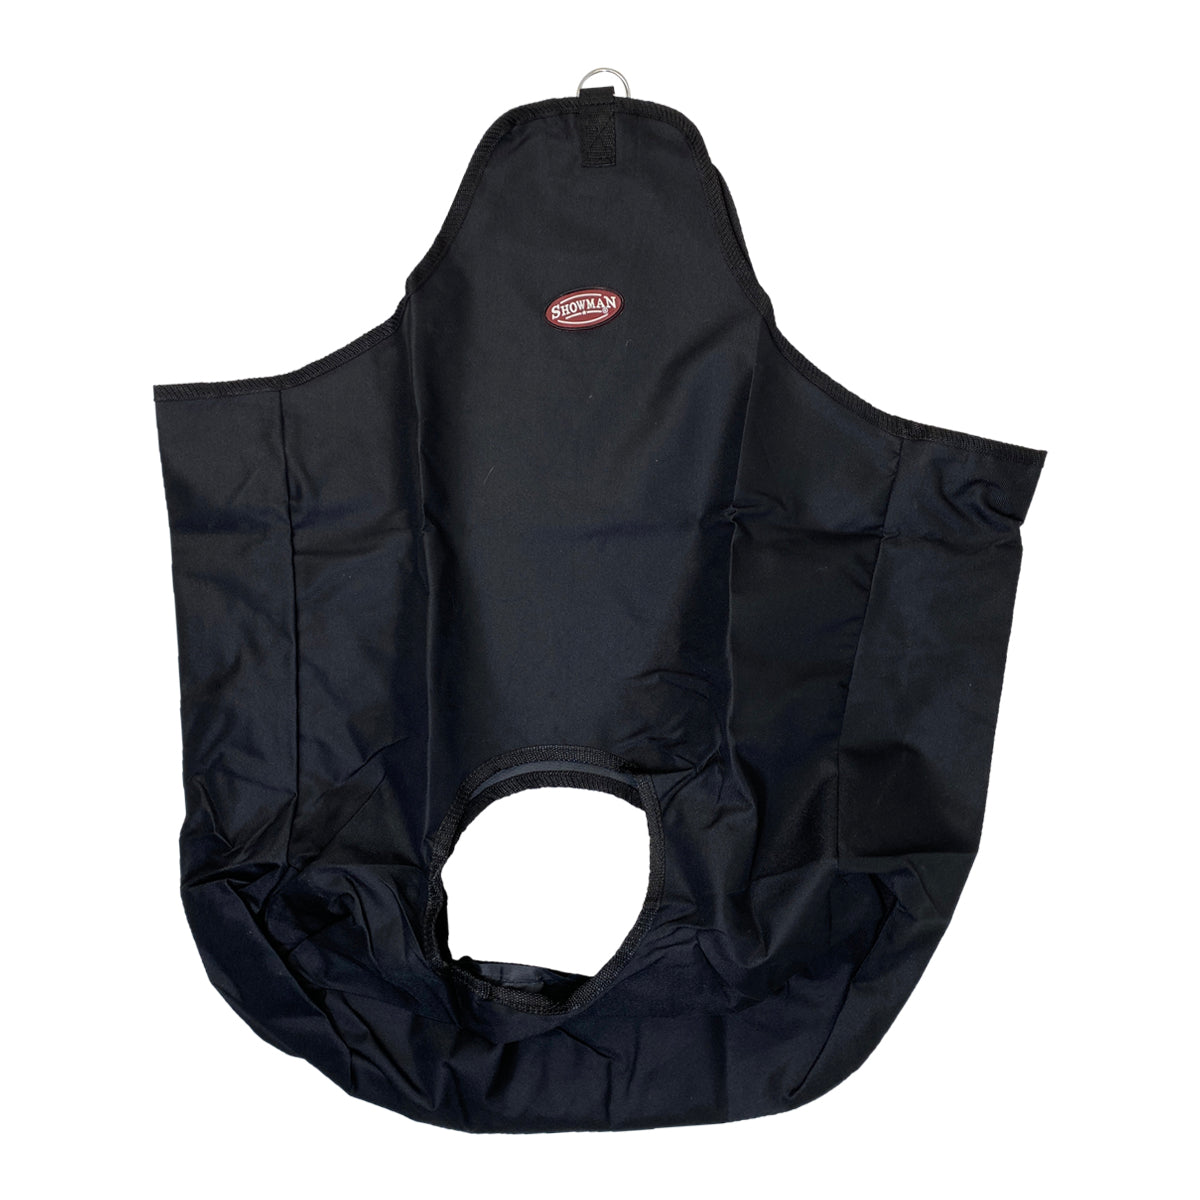 Showman 'Double Open' Nylon Hay Bag in Black